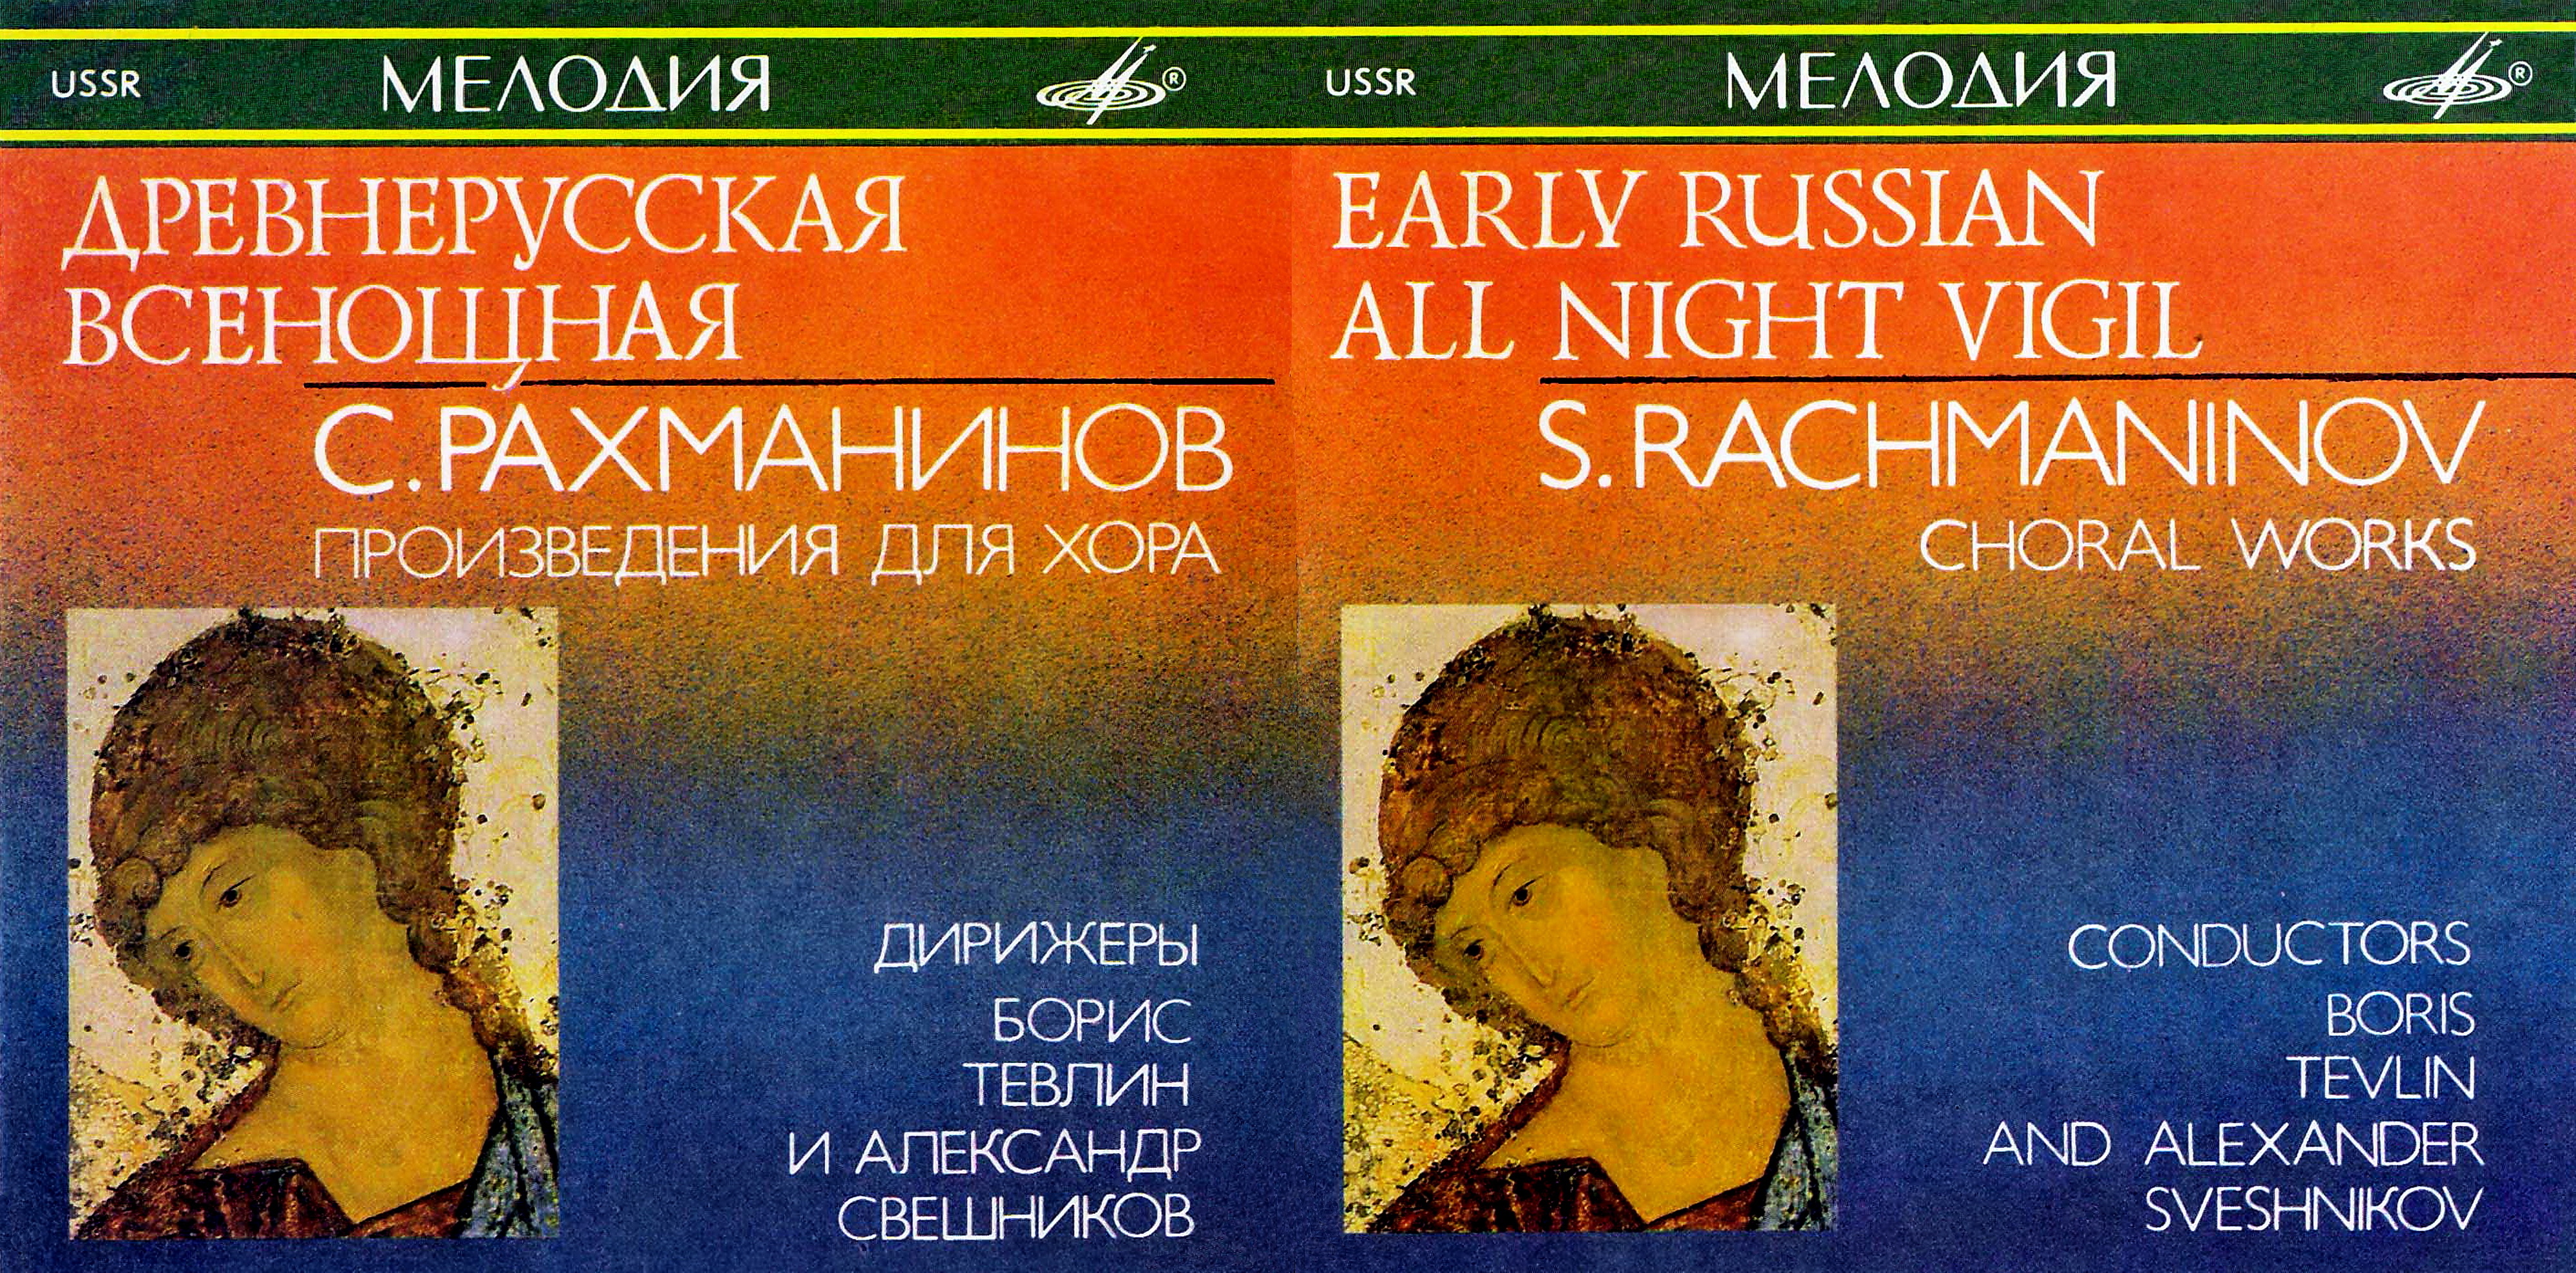 Early Russian All Night Vigil / S.Rachmaninov Choral Works - B.Tevlin & A.Sveshnikov